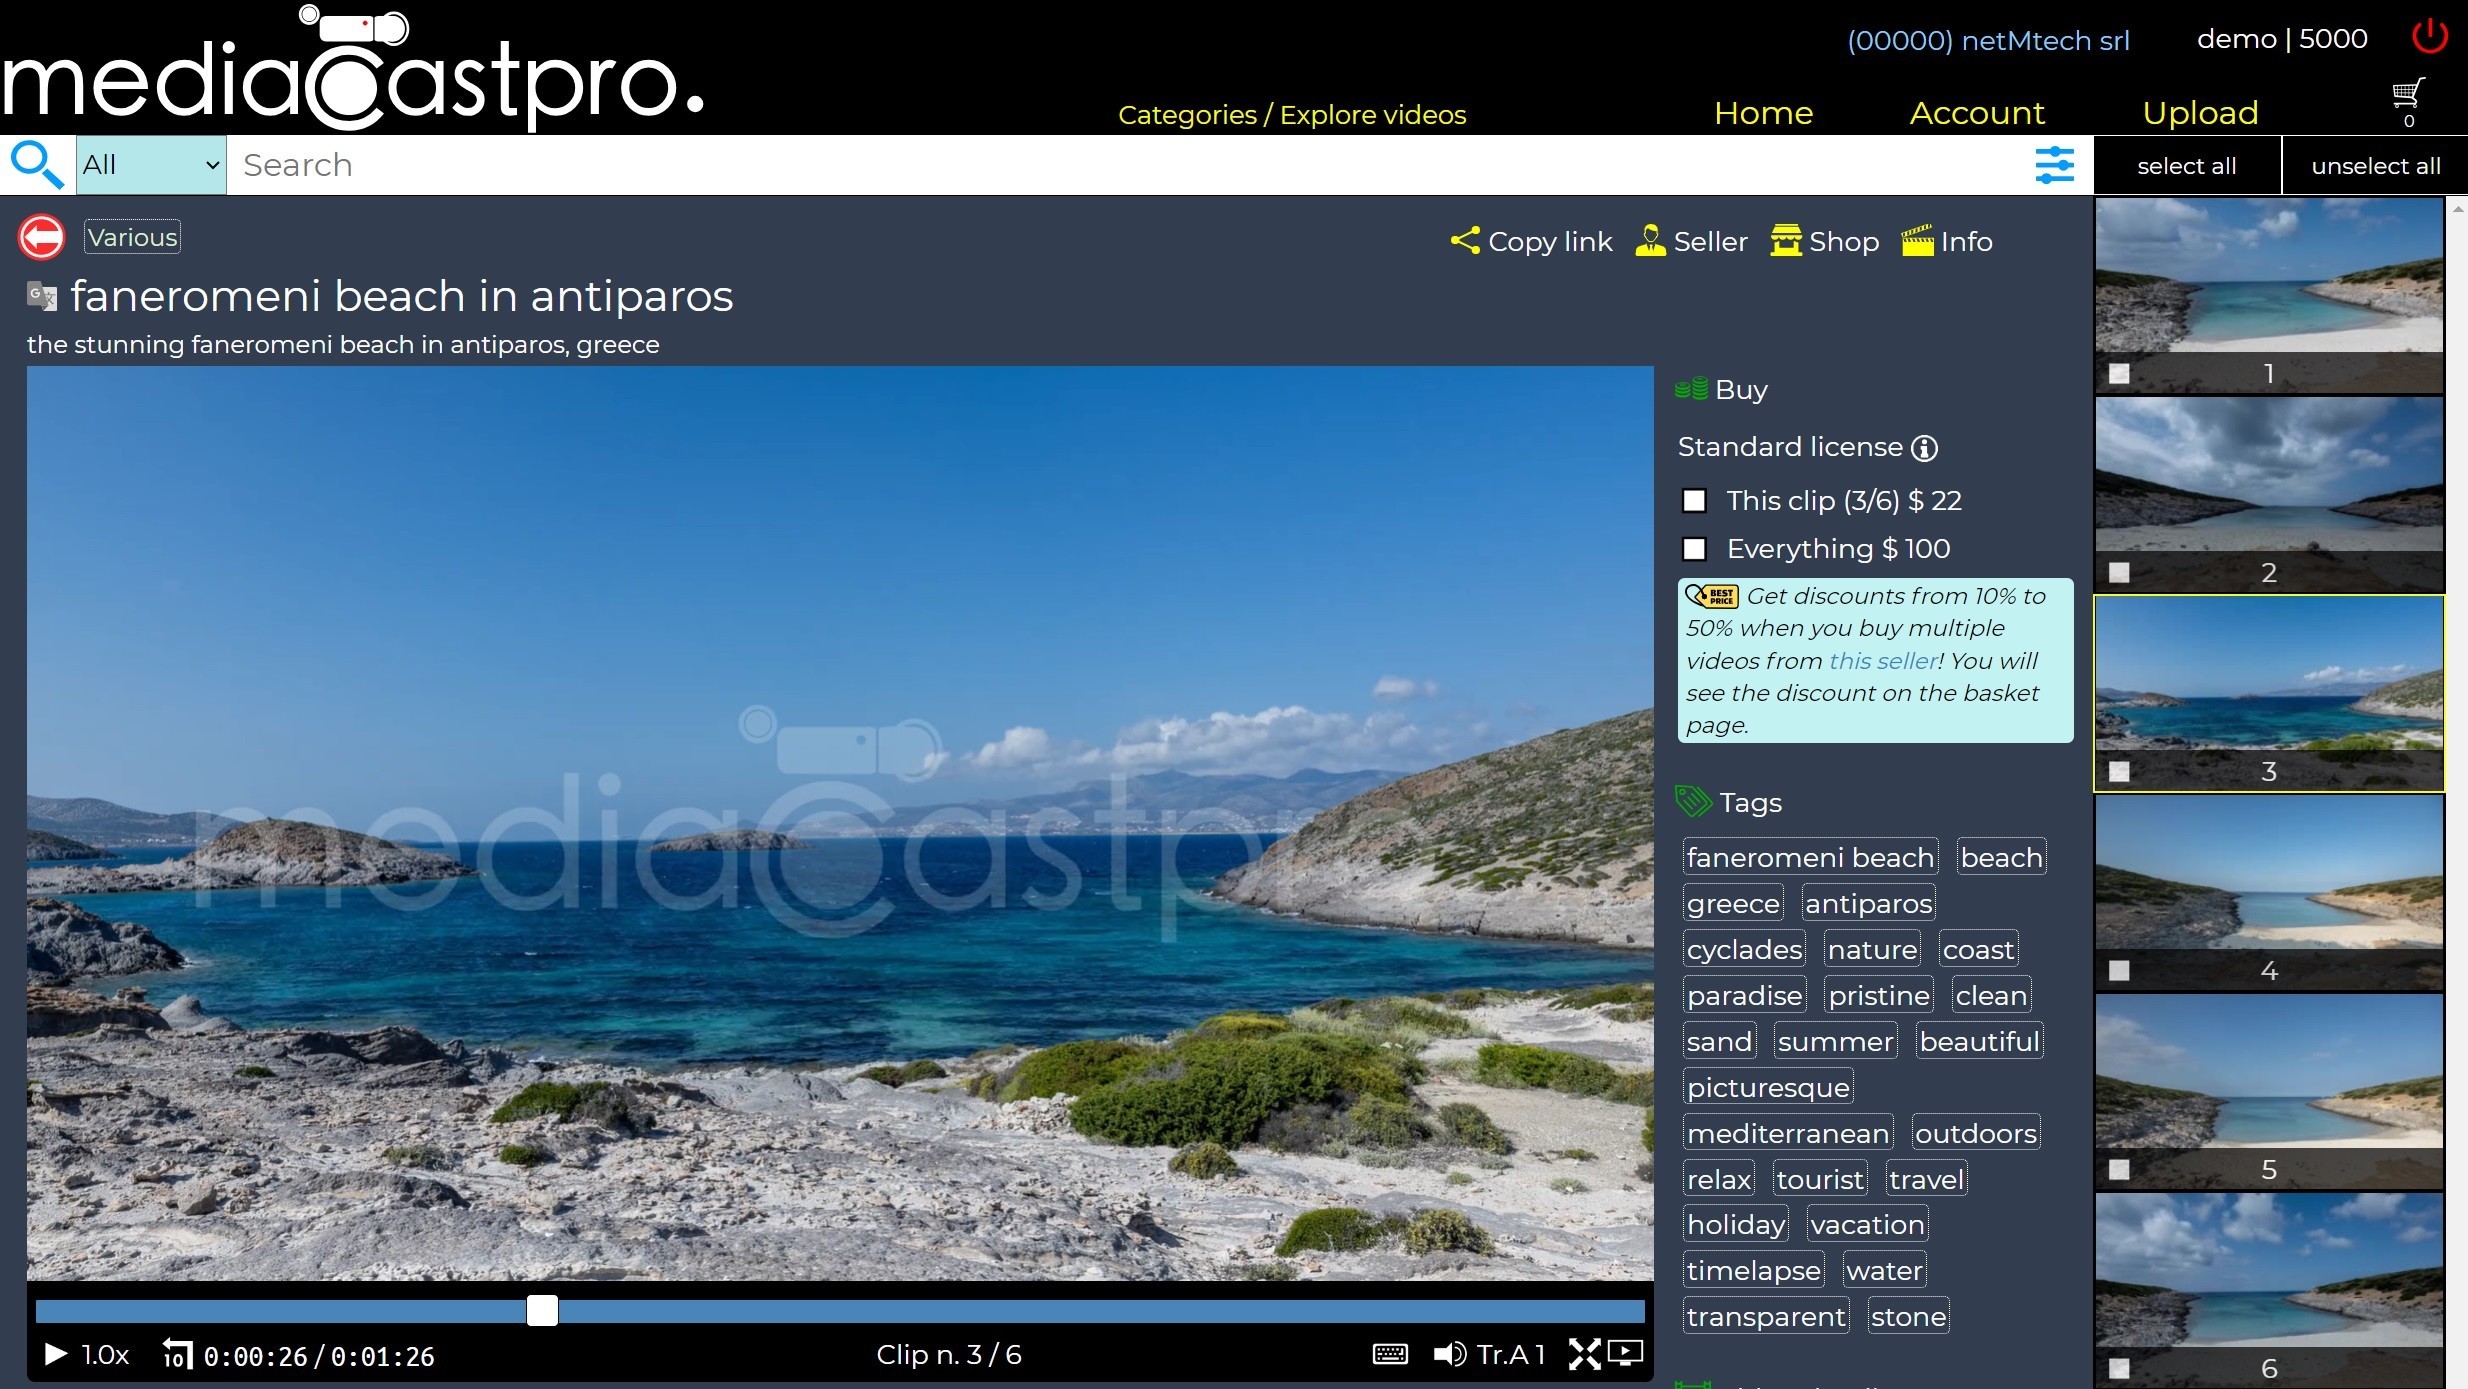 Example of video for sale on mediaCastpro